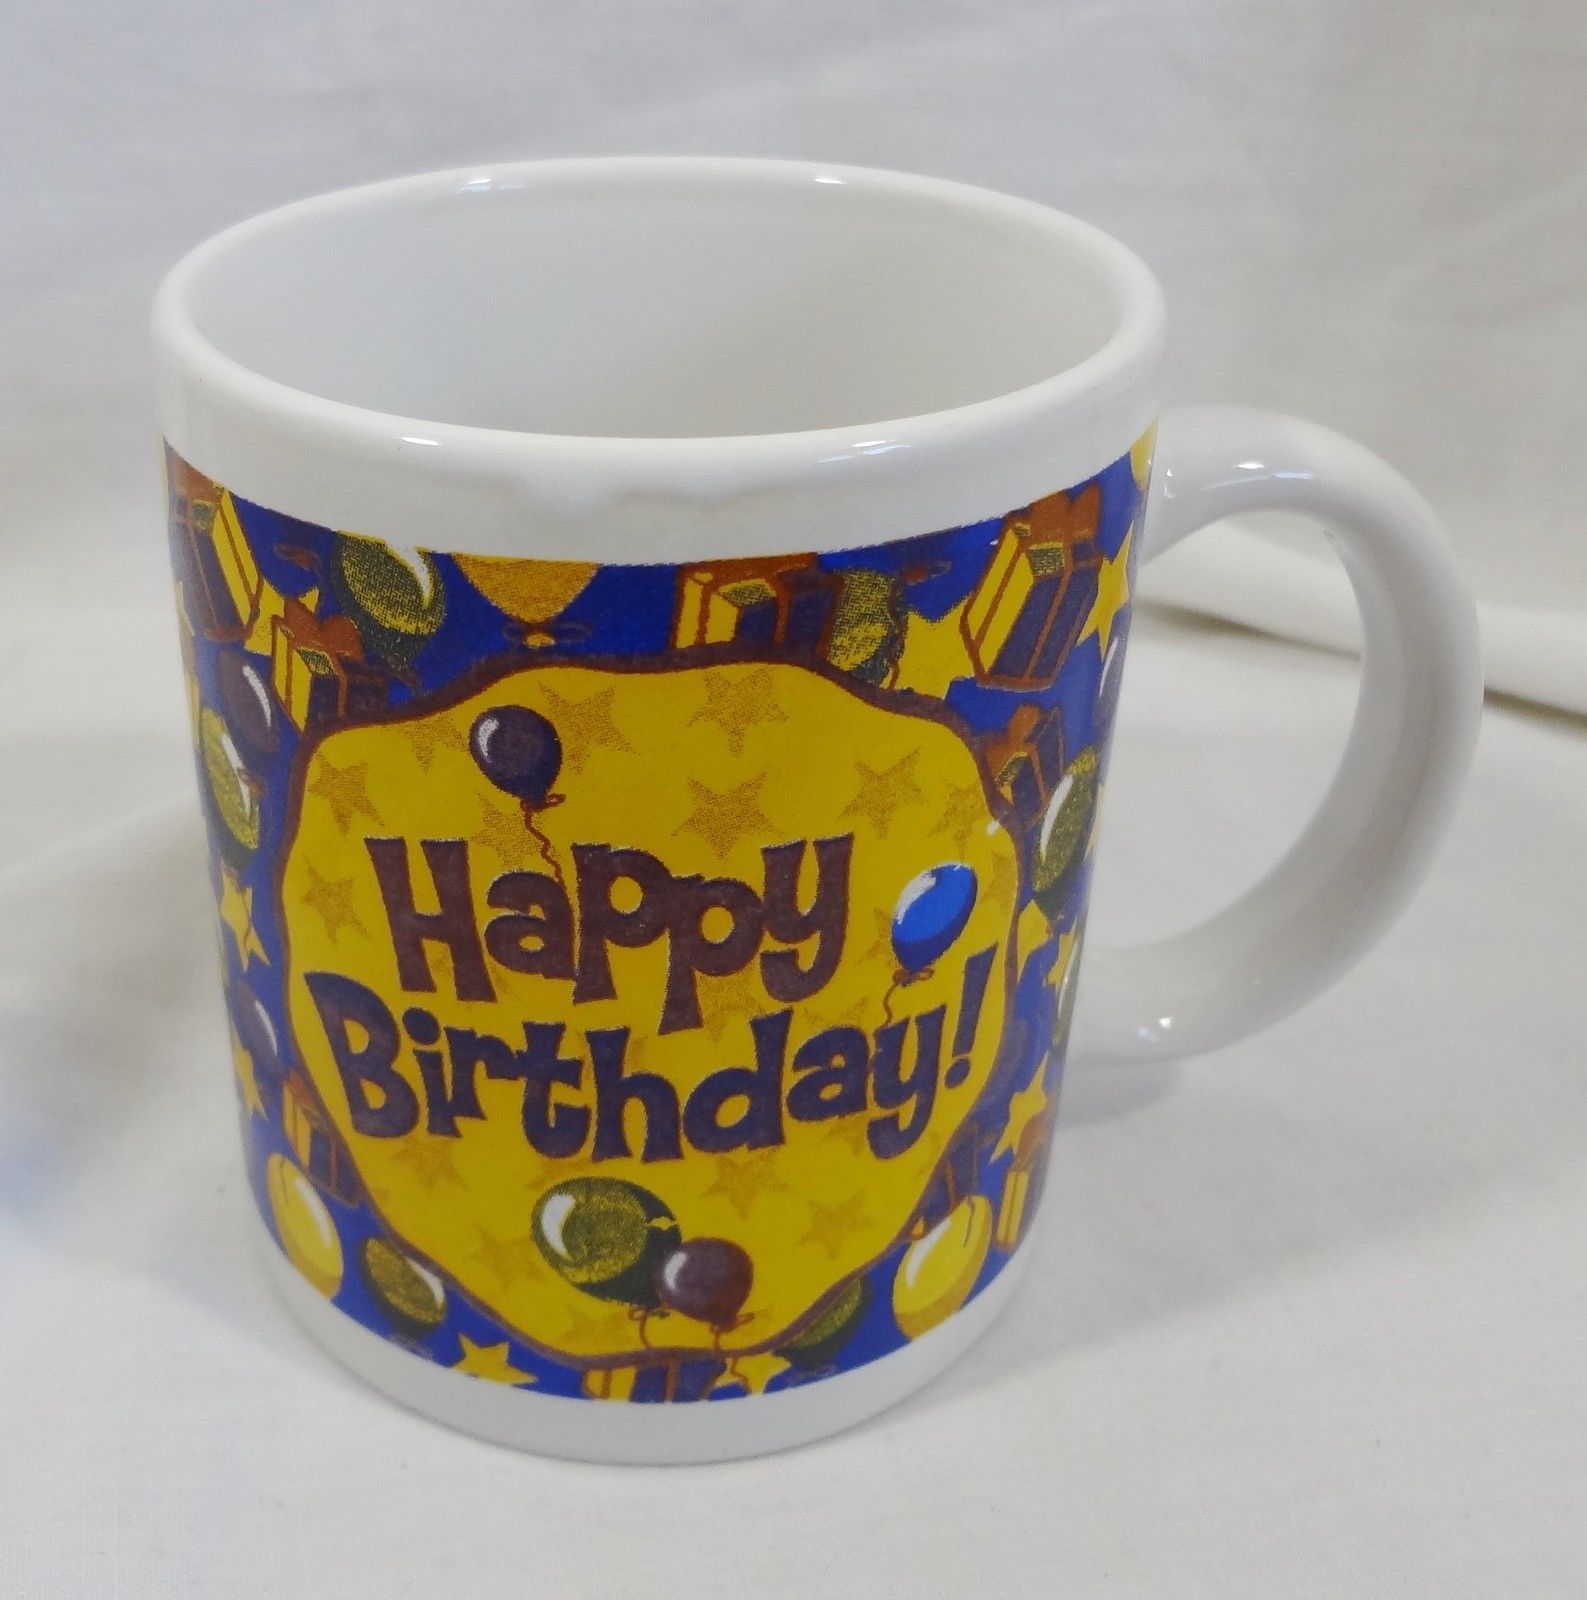 Happy Birthday 10 oz Coffee Cup Mug - $1.99